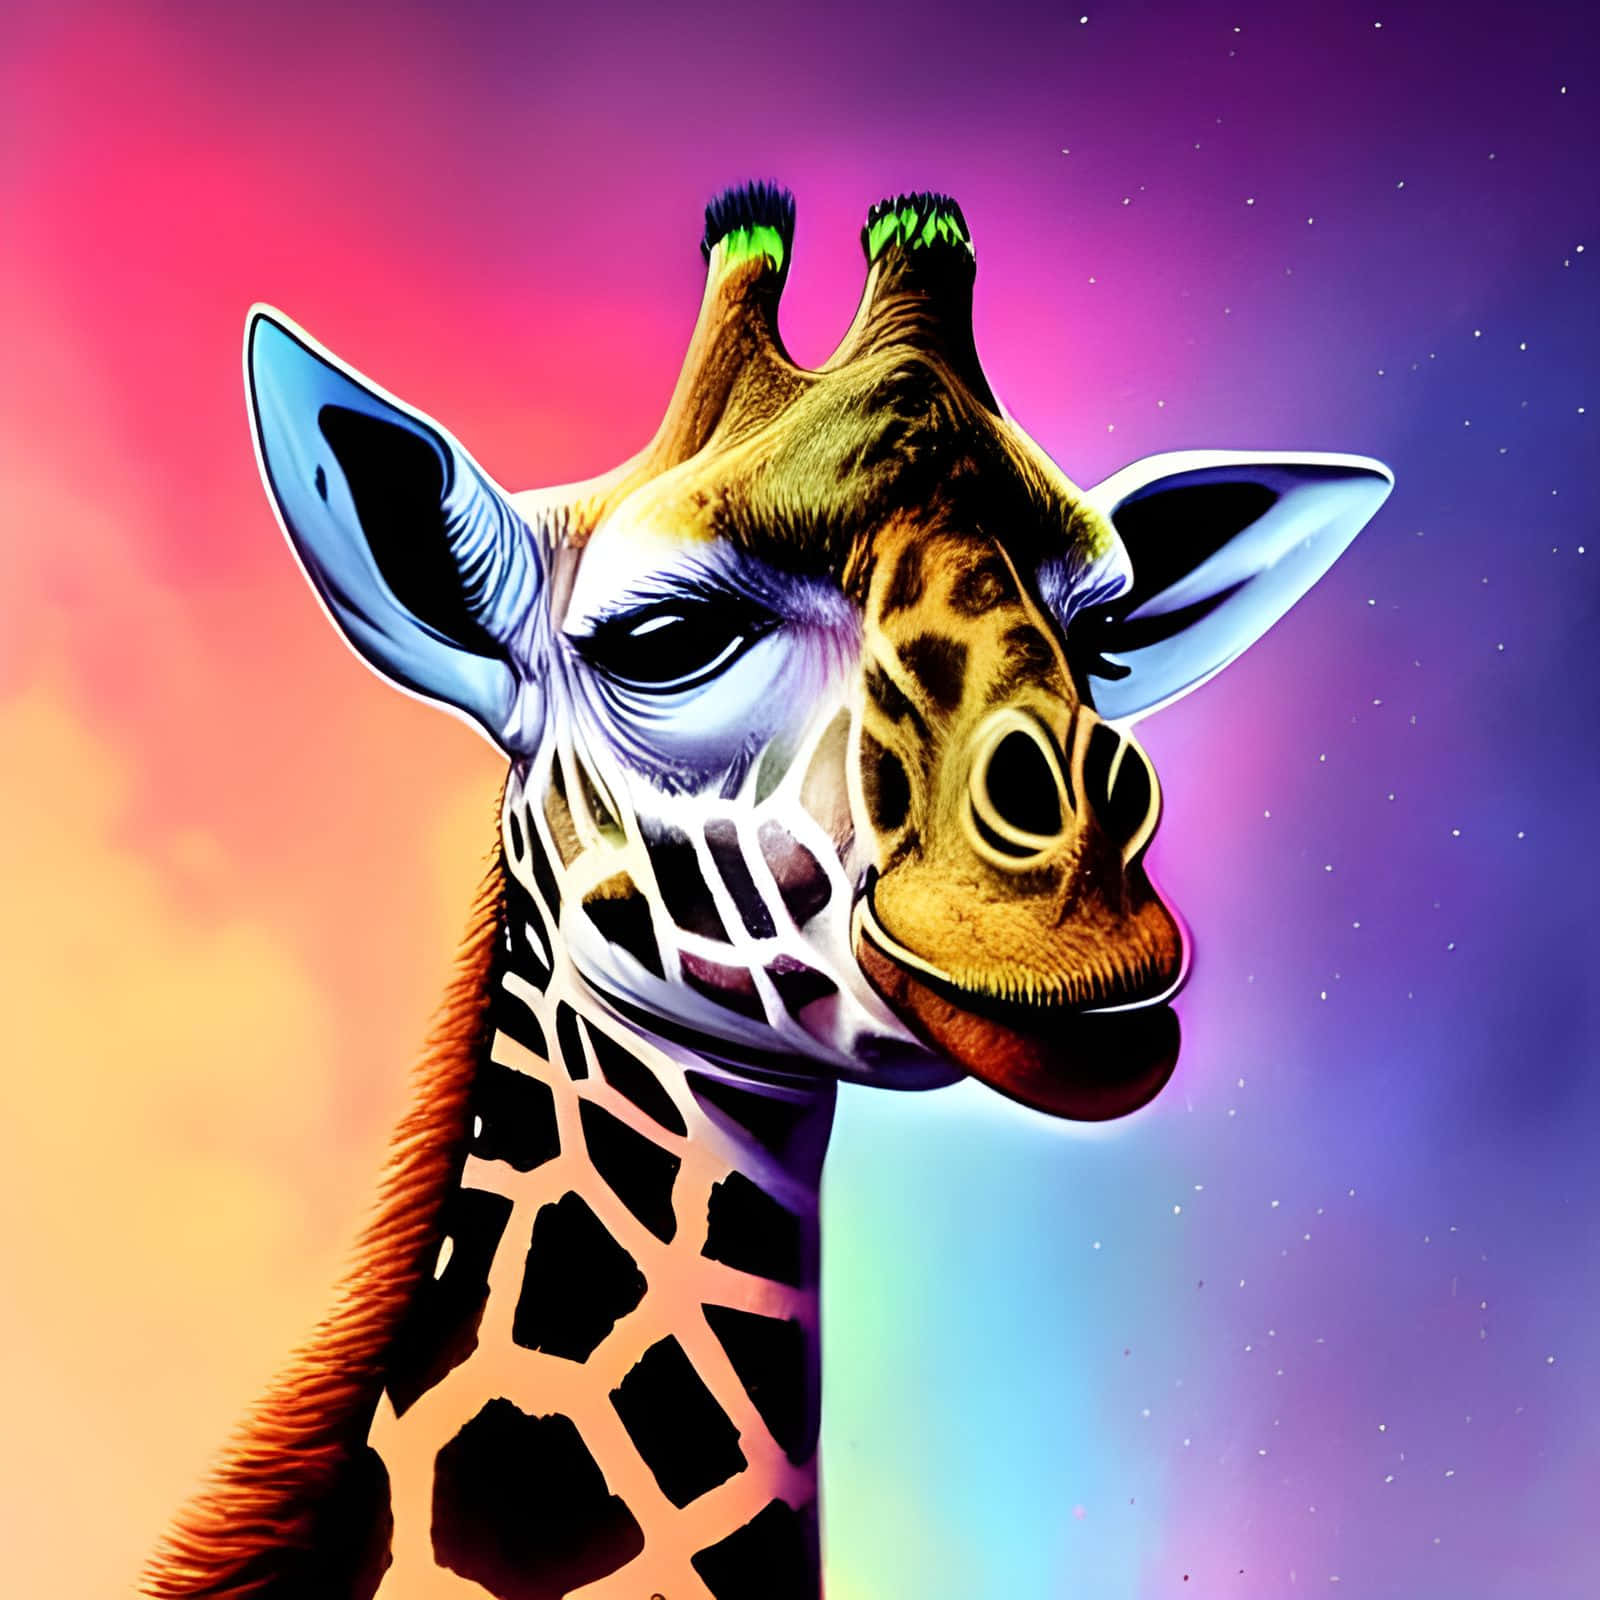 Download Digital Art Of A Cute Giraffe Wallpaper | Wallpapers.com